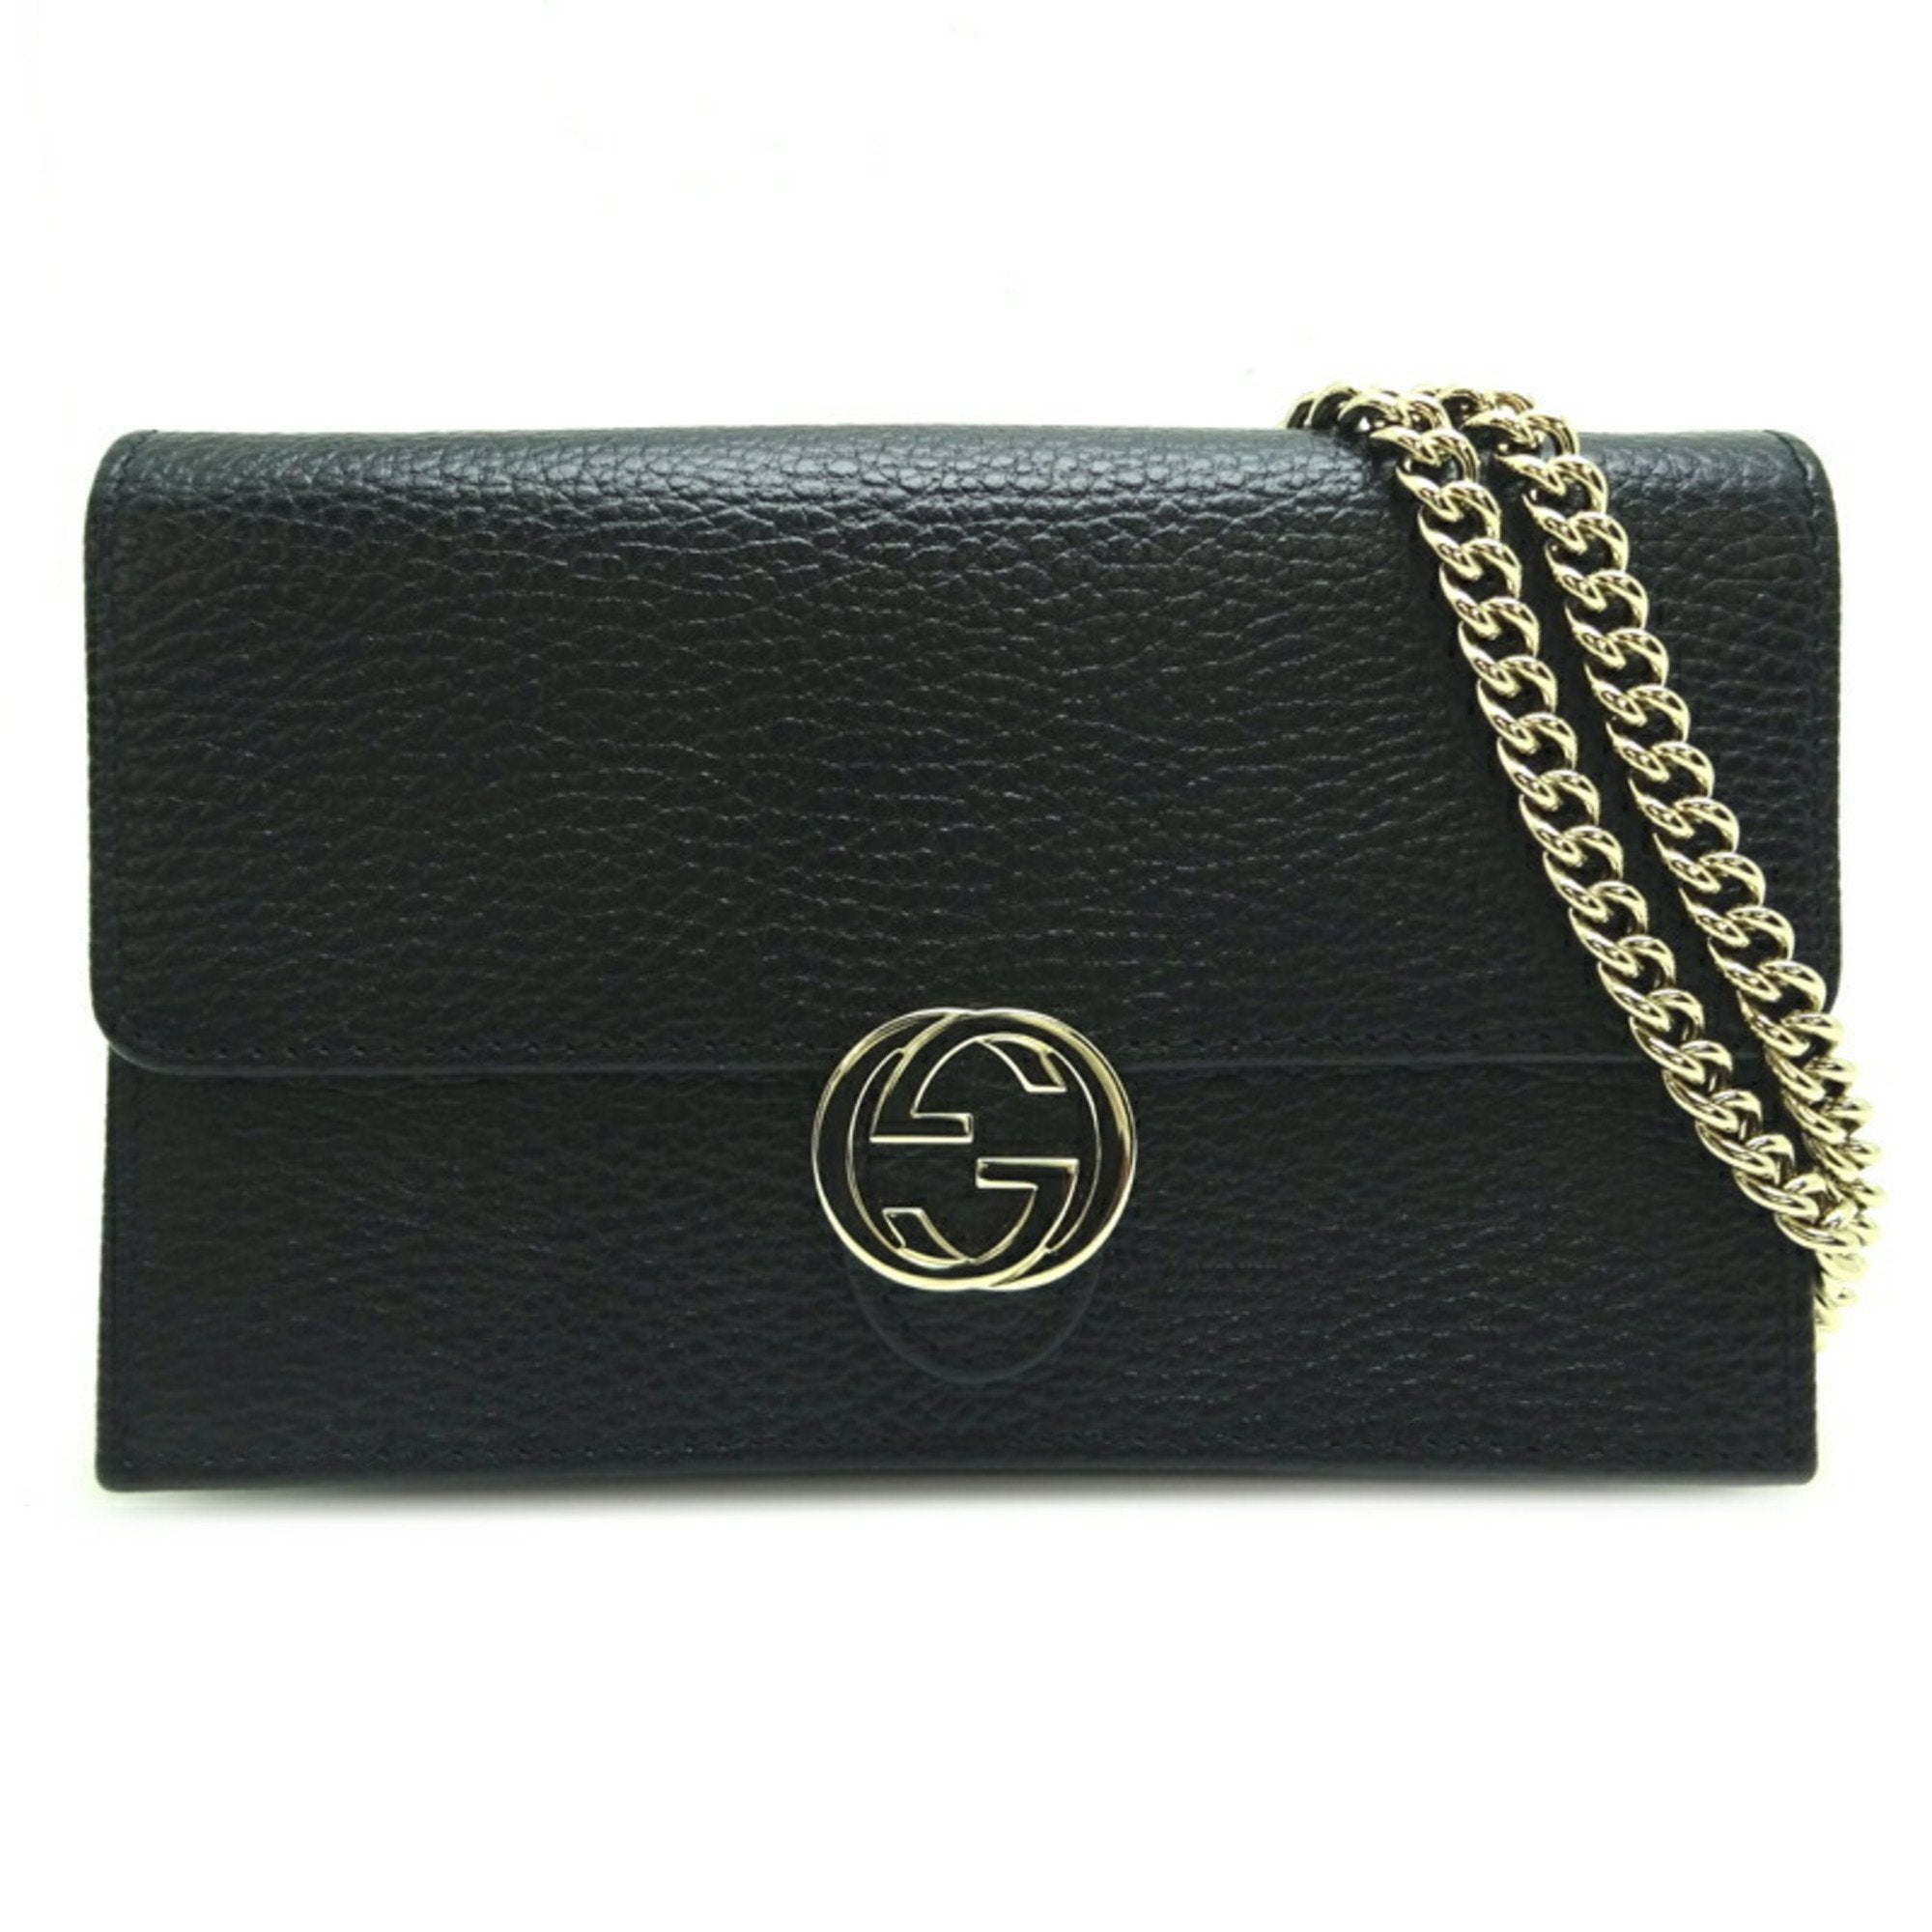 Women's Chain/Shoulder Wallet Black